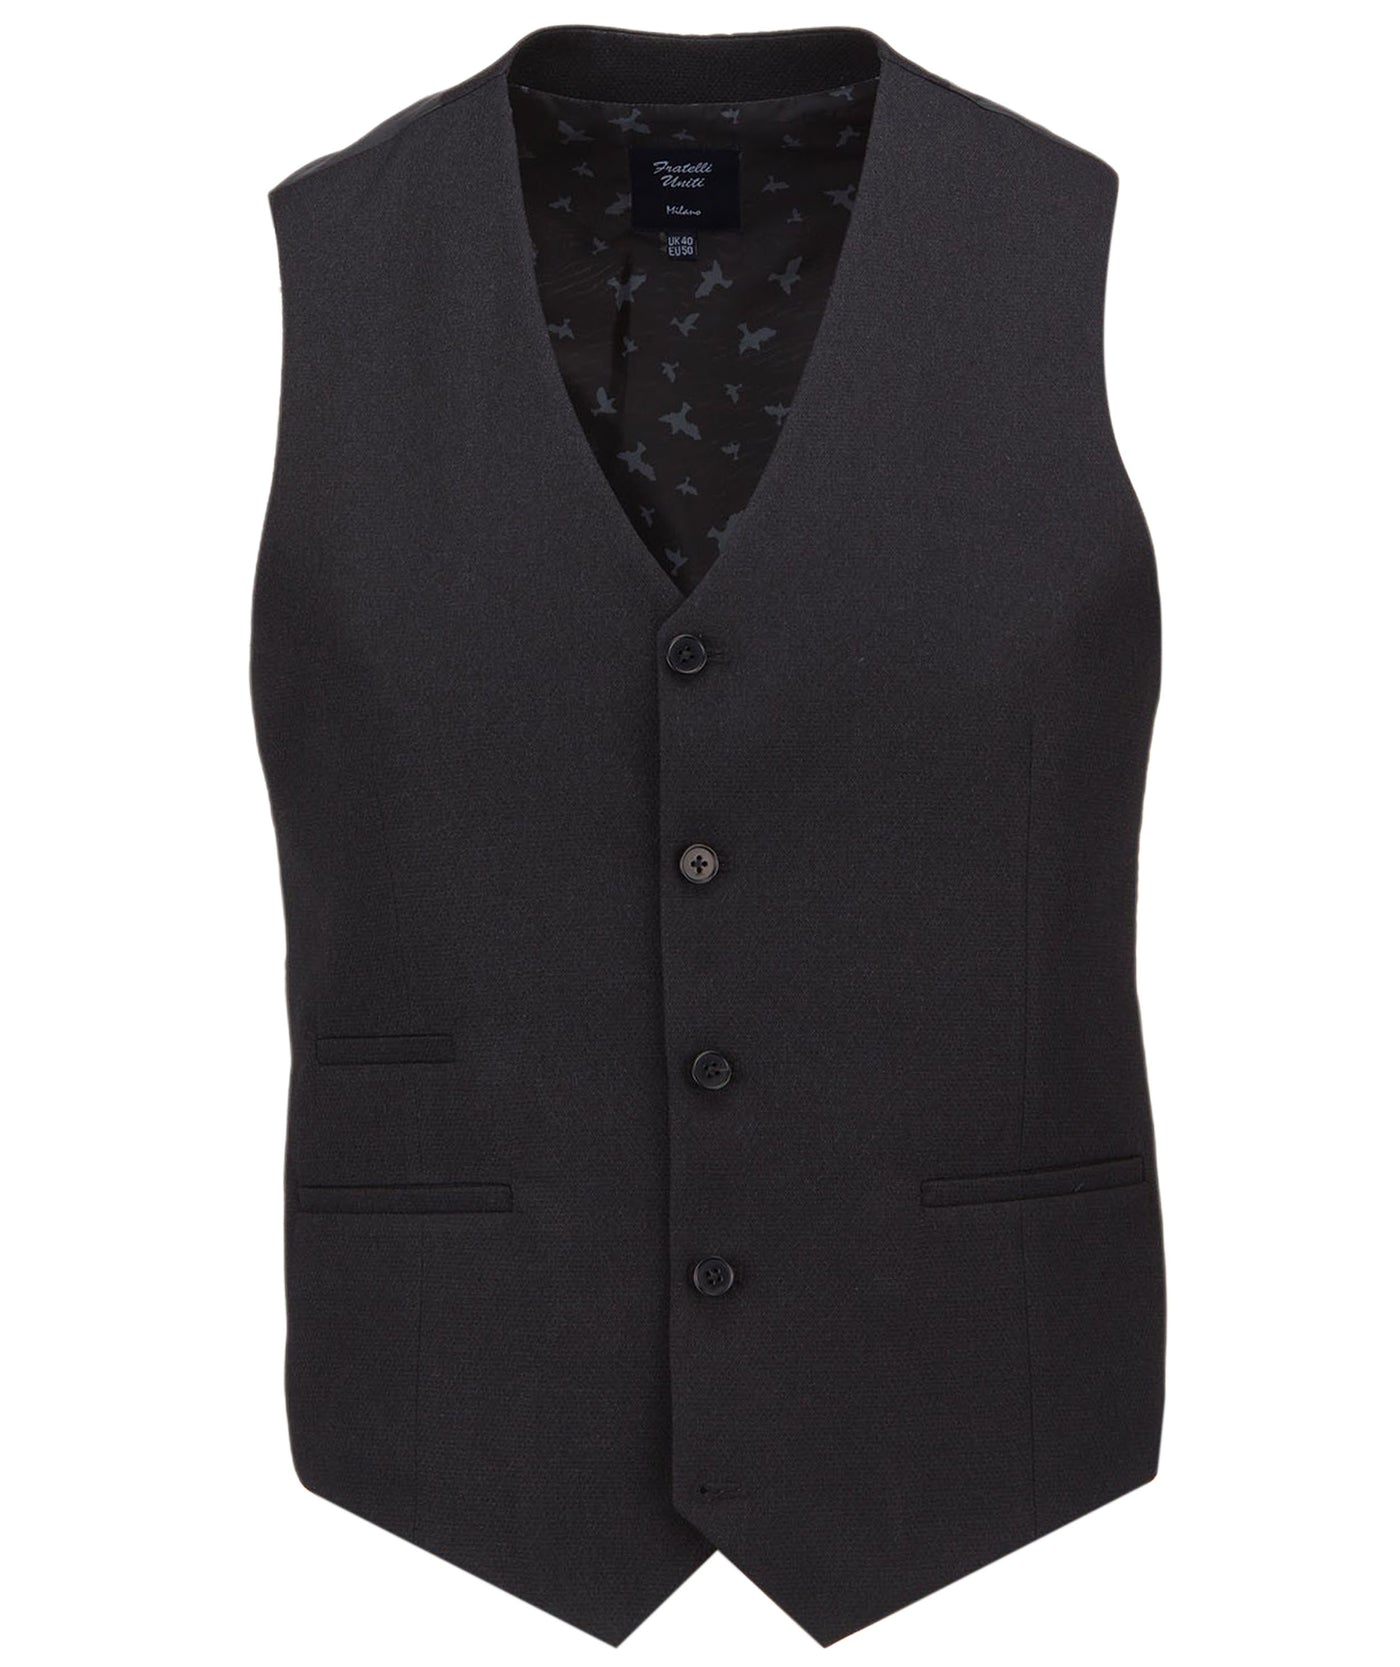 Smart Sharp Textured Waistcoat - Black 24